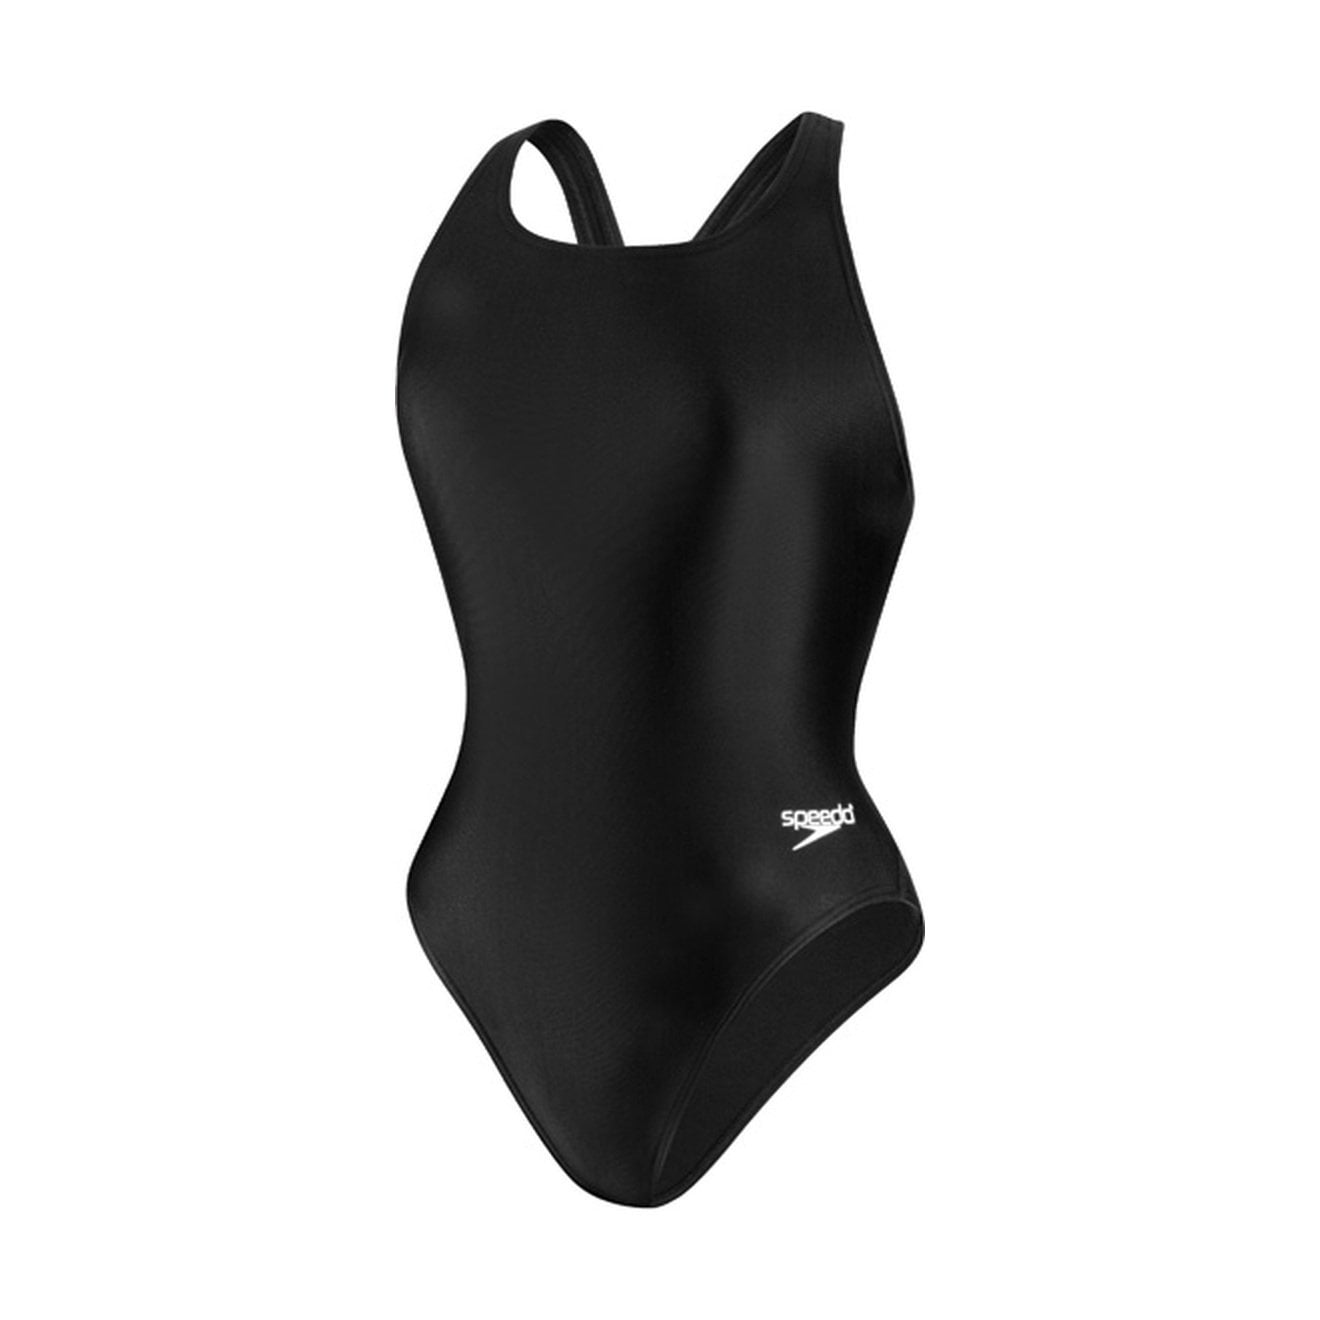 Adoretex Women's Polyester Unitard Swimsuit (FP003) - Black - 12 